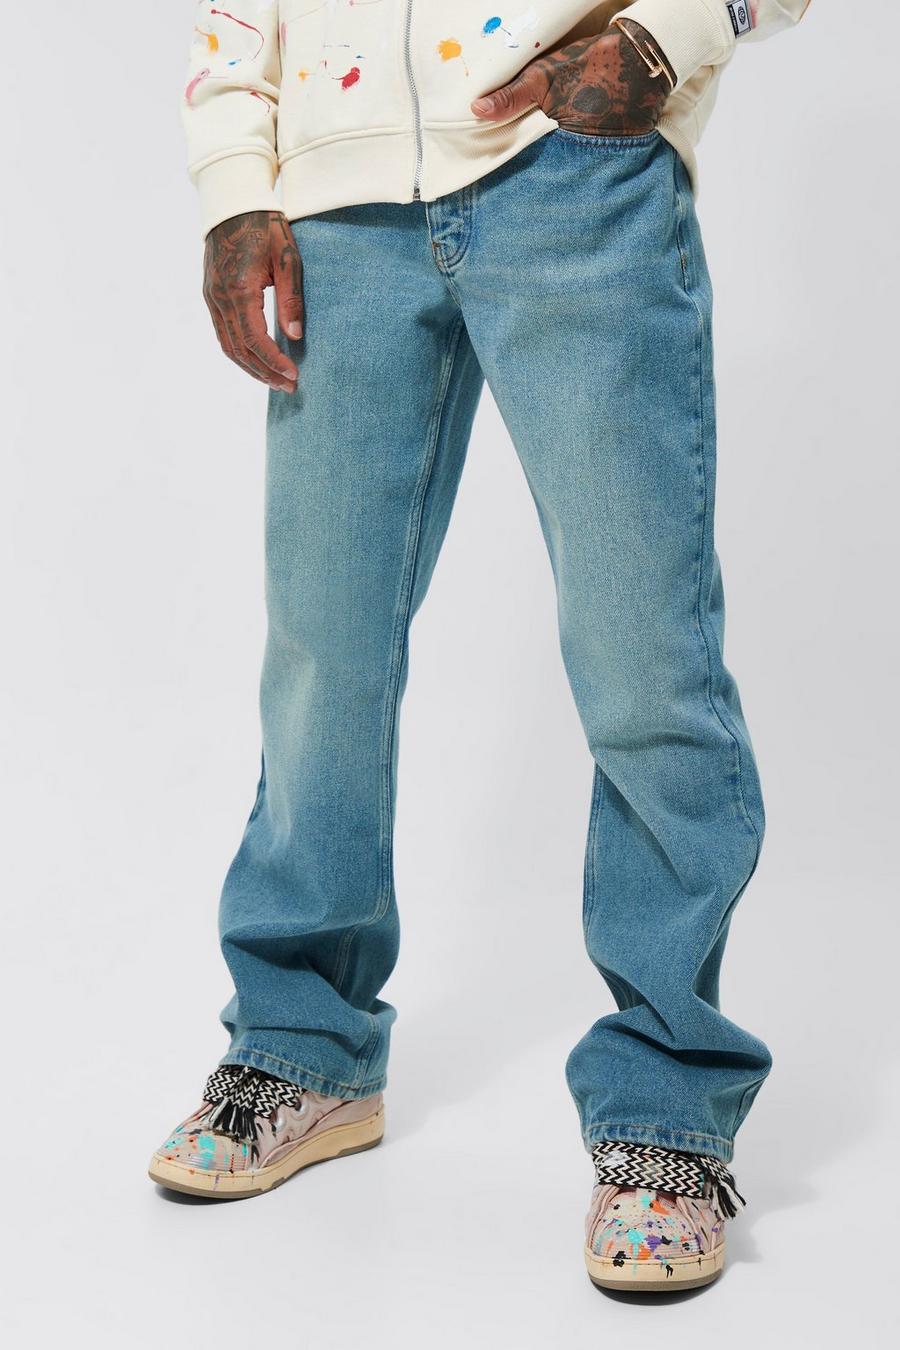 Jeans rilassati in denim rigido, Antique wash azzurro